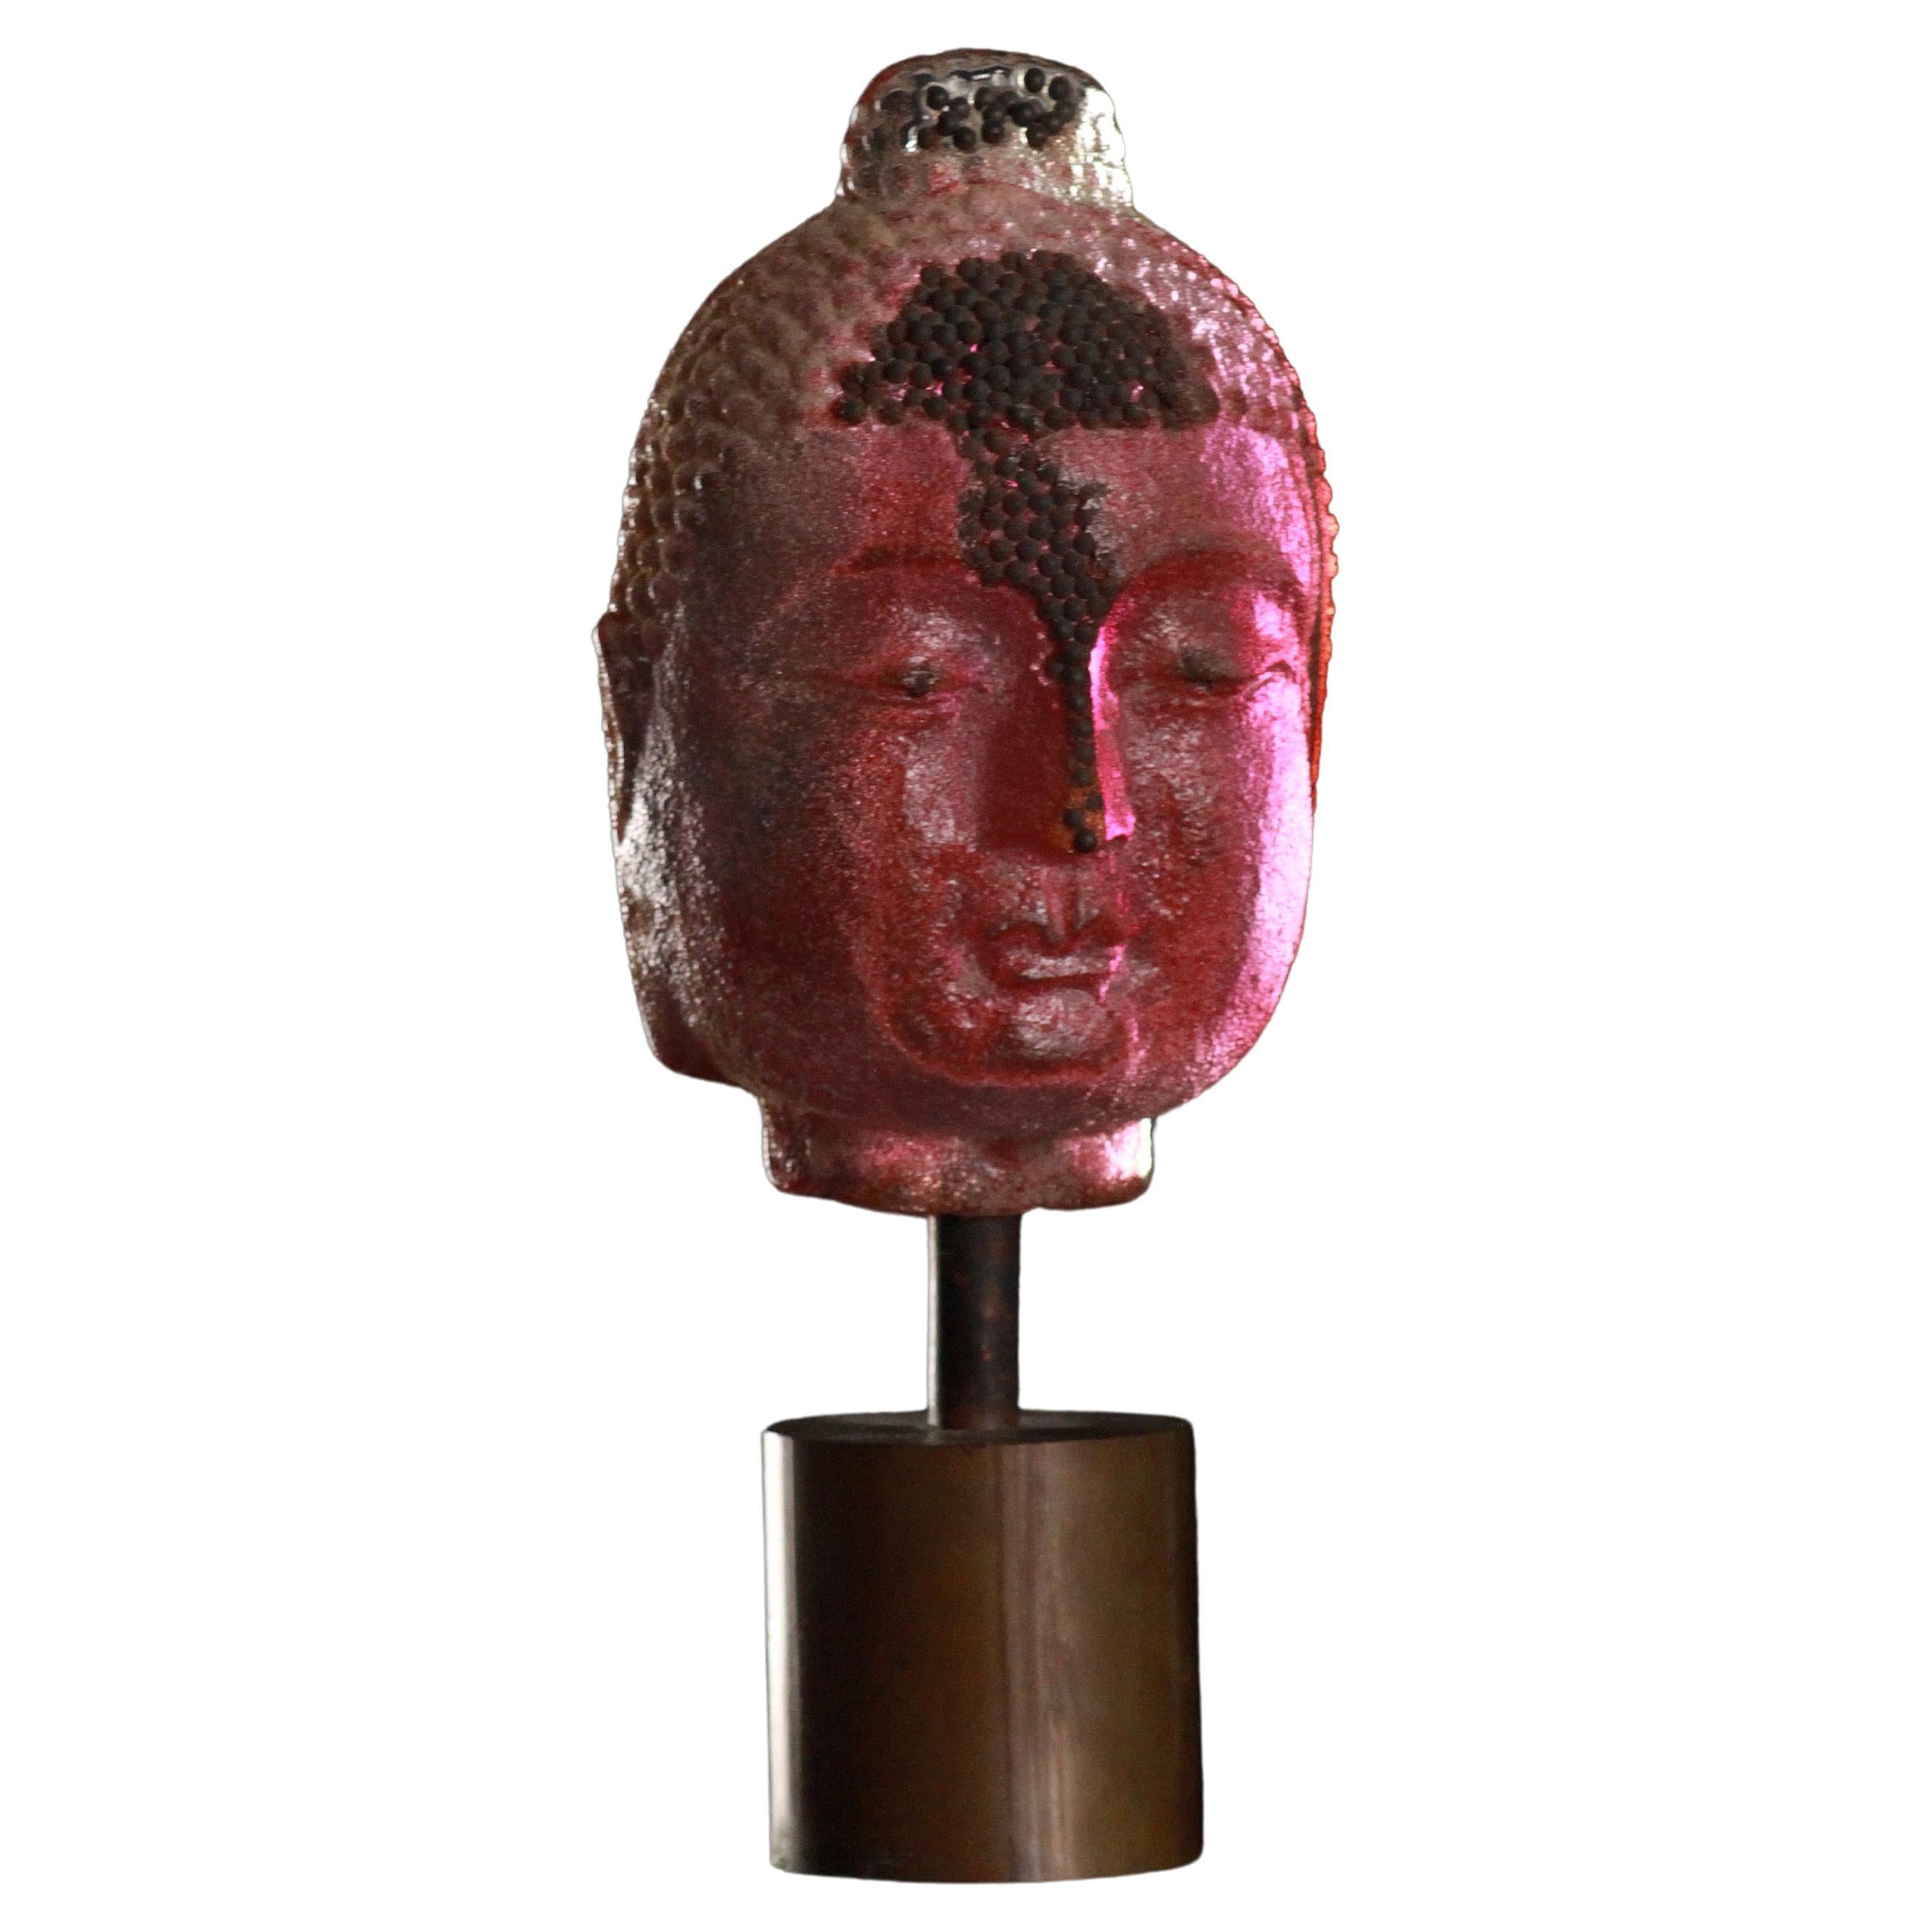 Marlene Rose (b. 1967) Head of Buddha, 2004 Sand Cast Glass and Steel Sculpture